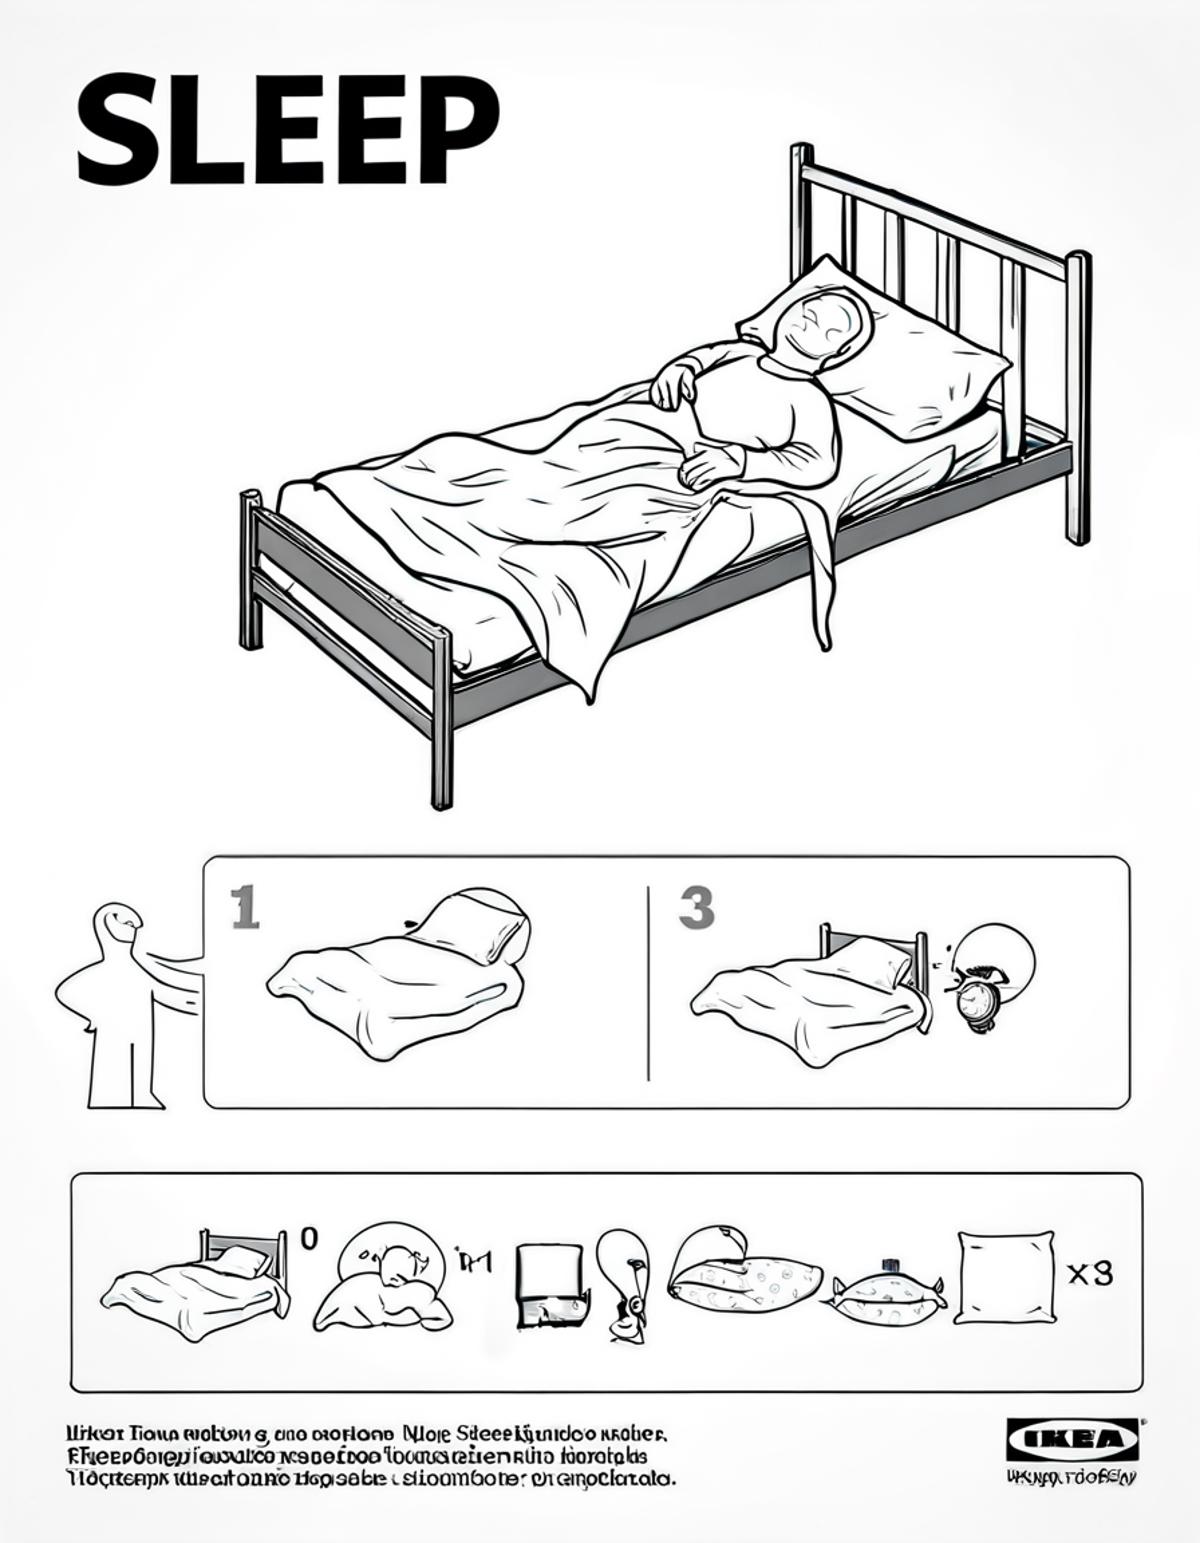 Sleeping Cartoon: A cartoon drawing of a person sleeping in a bed.